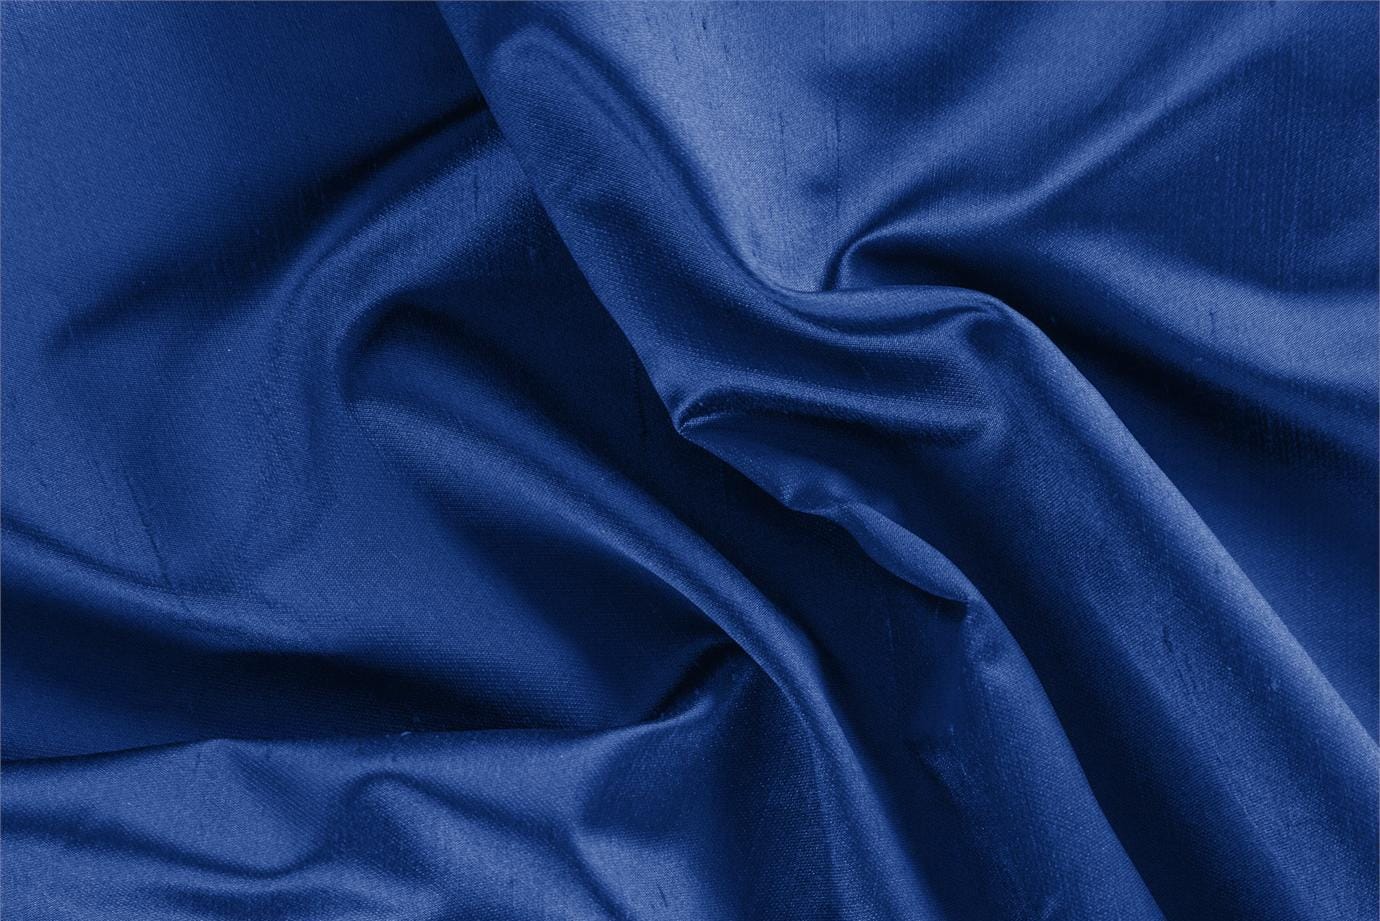 Tissu Satin Shantung Bleu royal en Soie pour vêtements